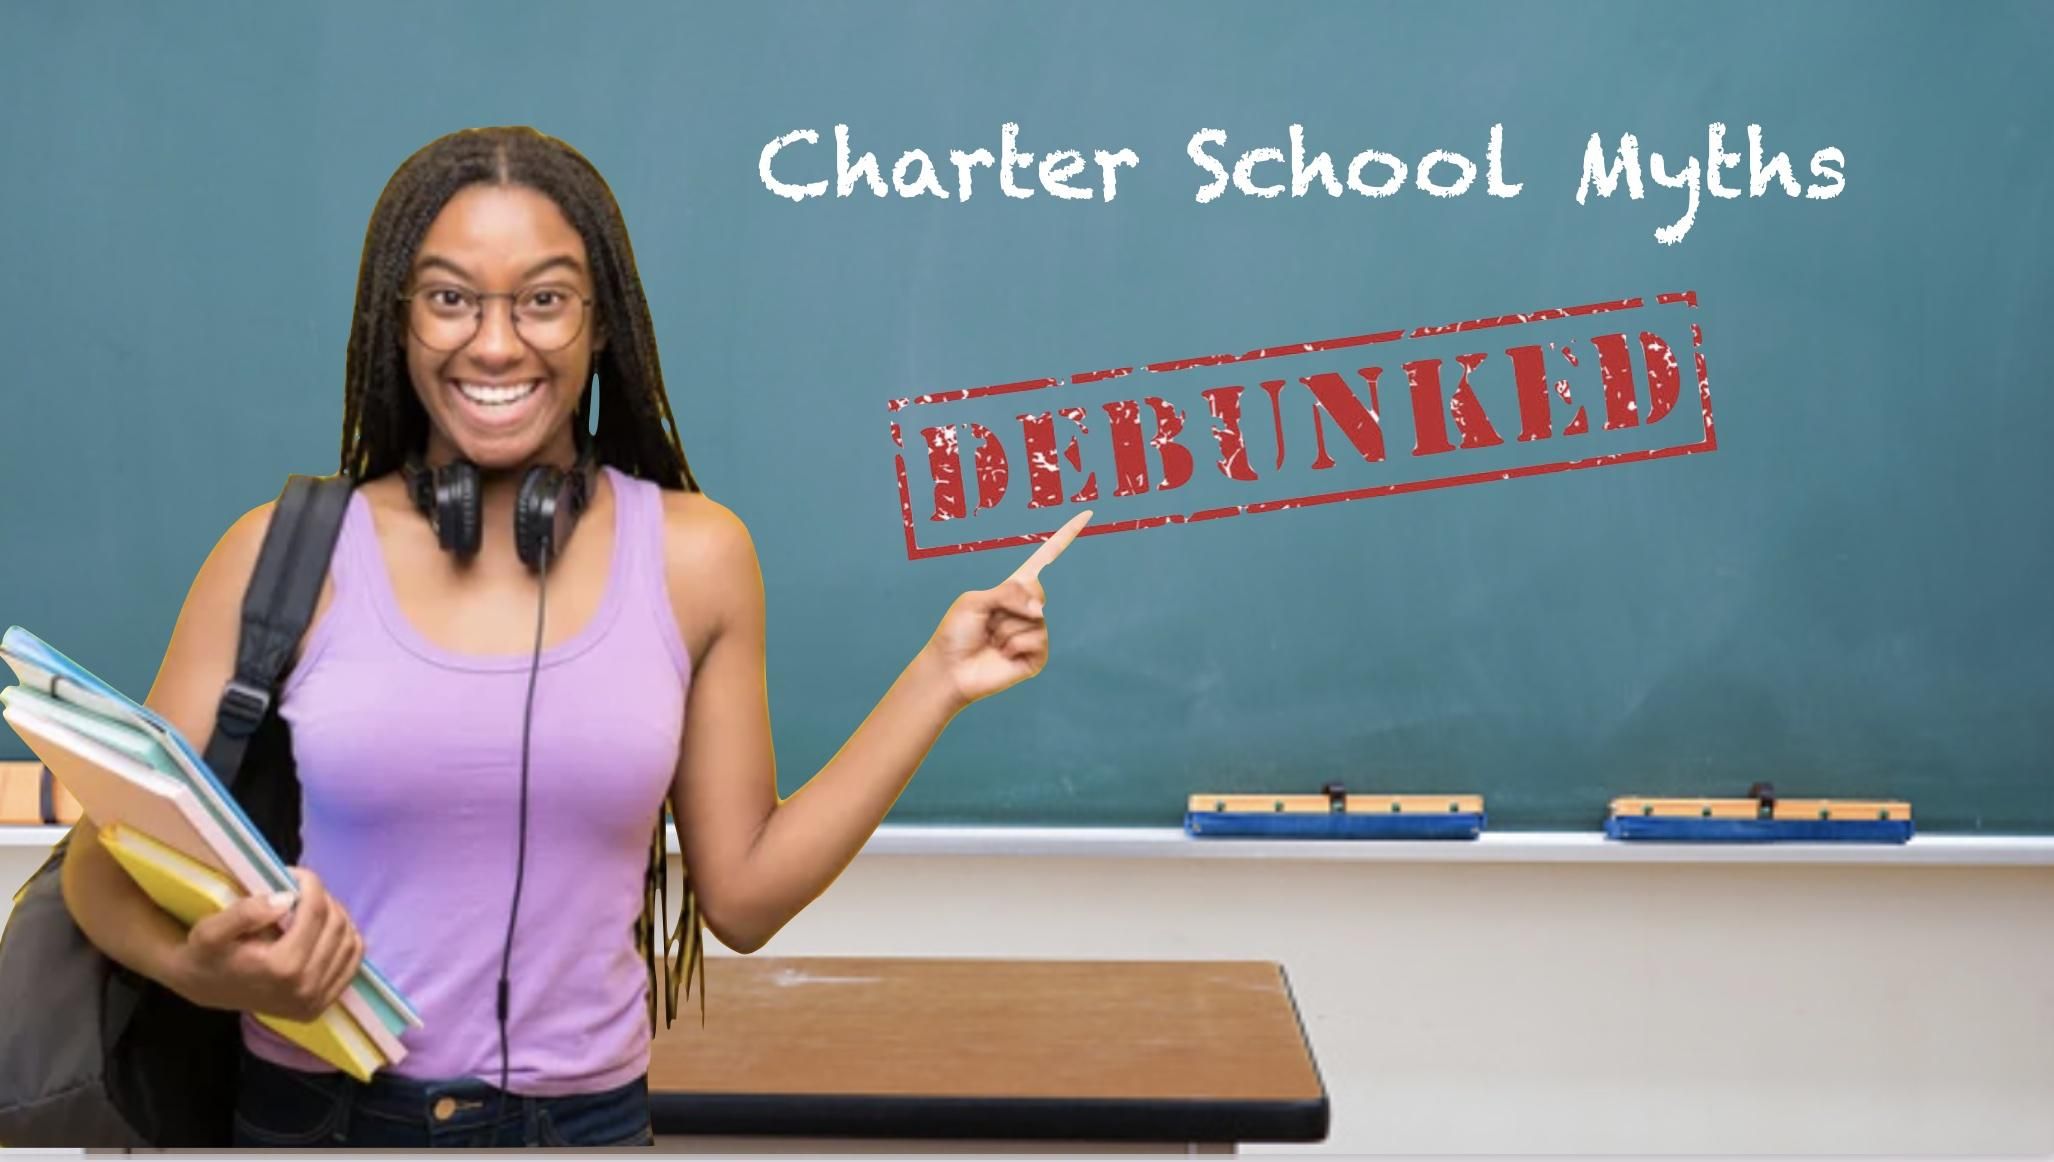 Top 5 Charter School Myths Debunked